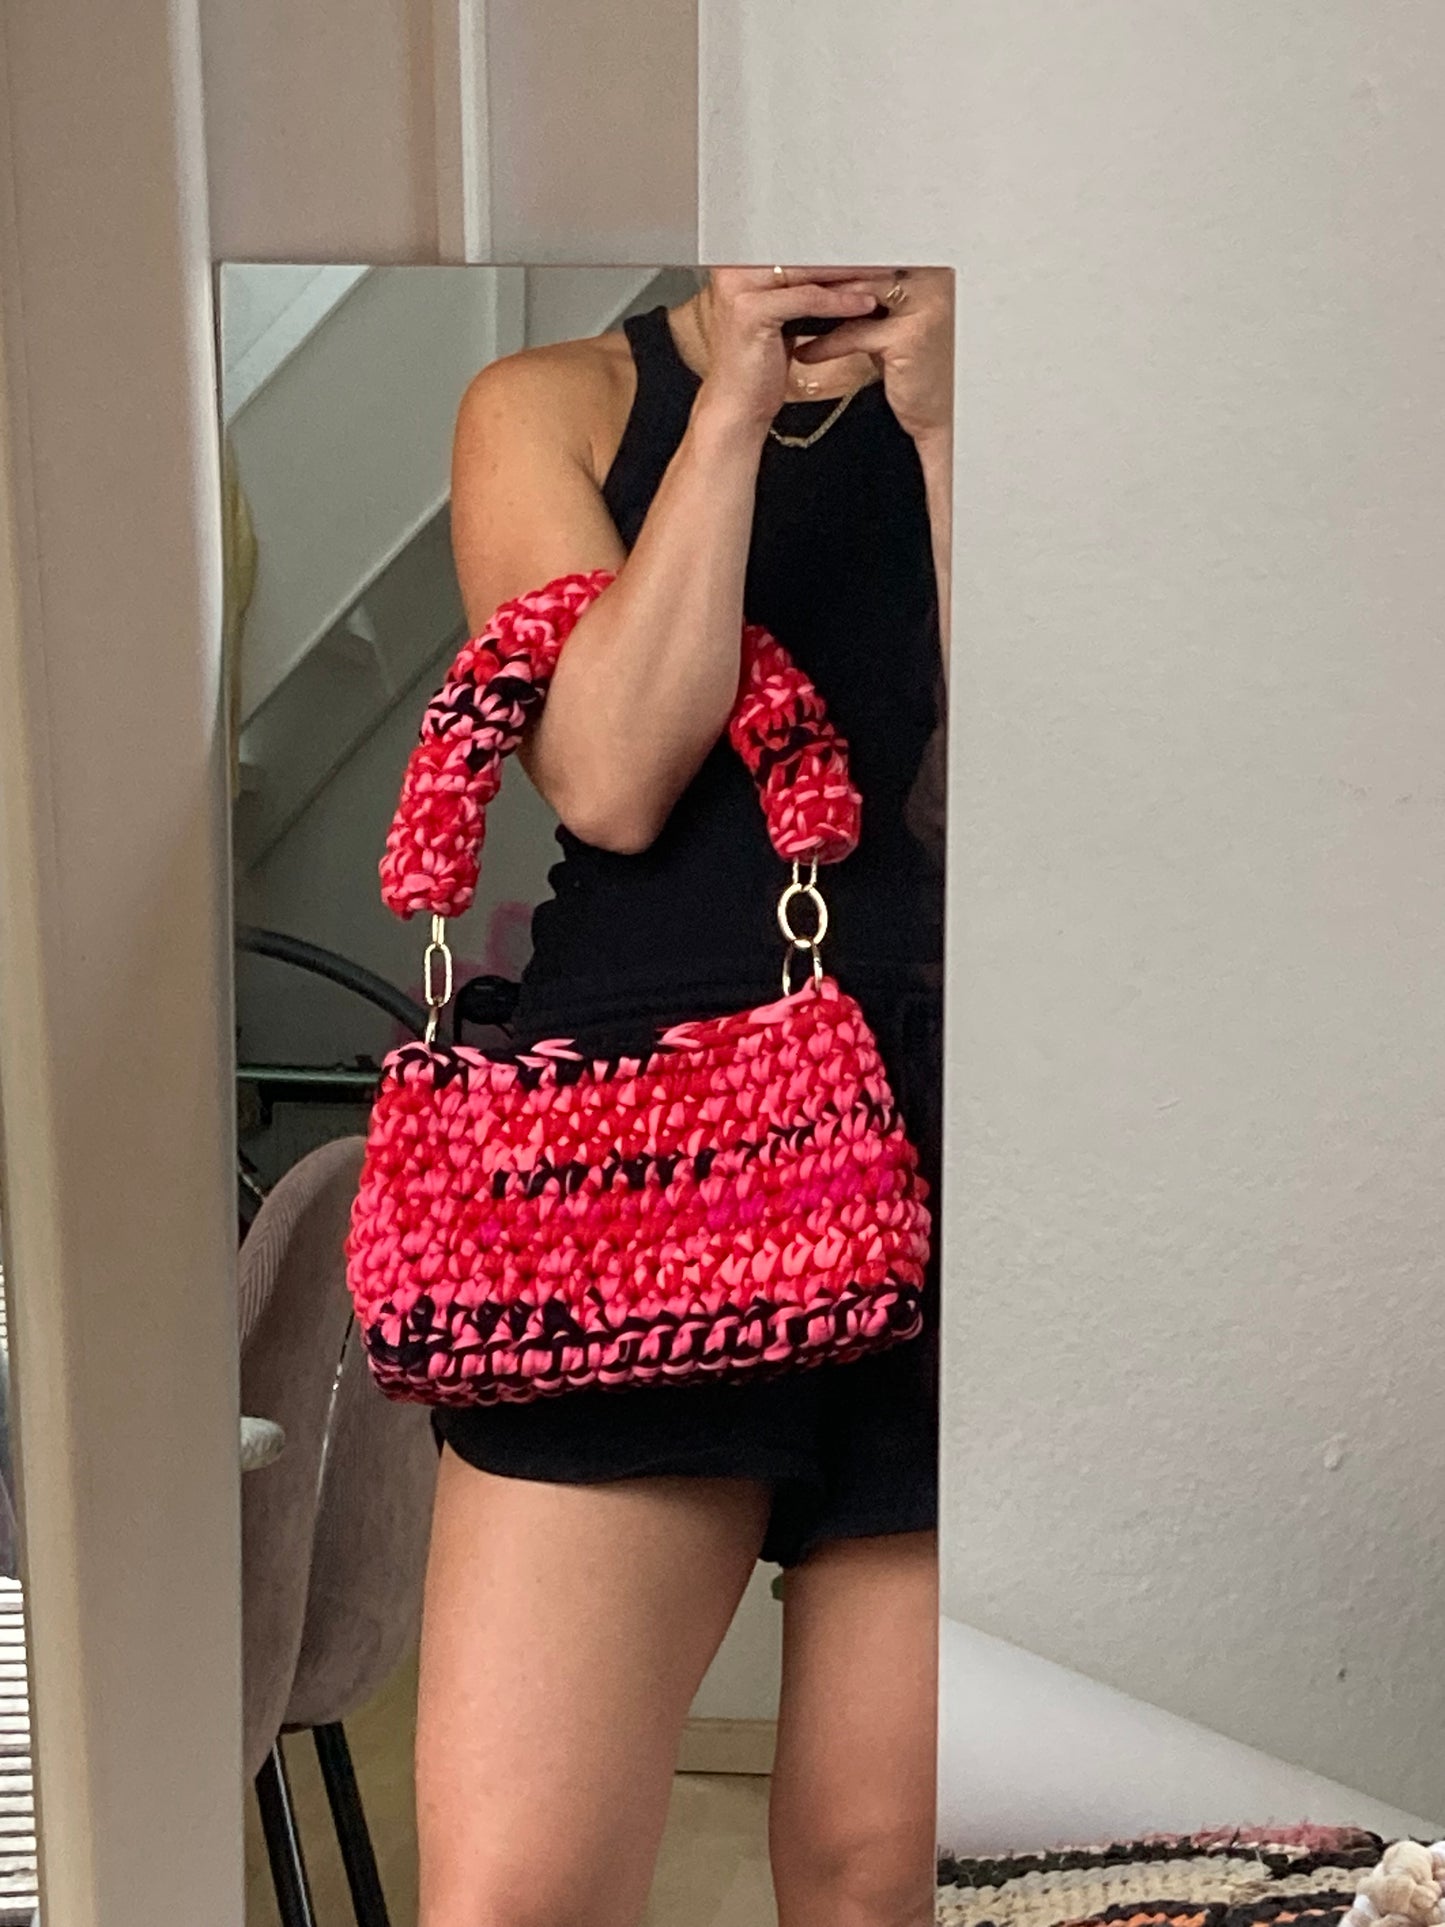 Red and Pink JOE Crochet Bag - Medium